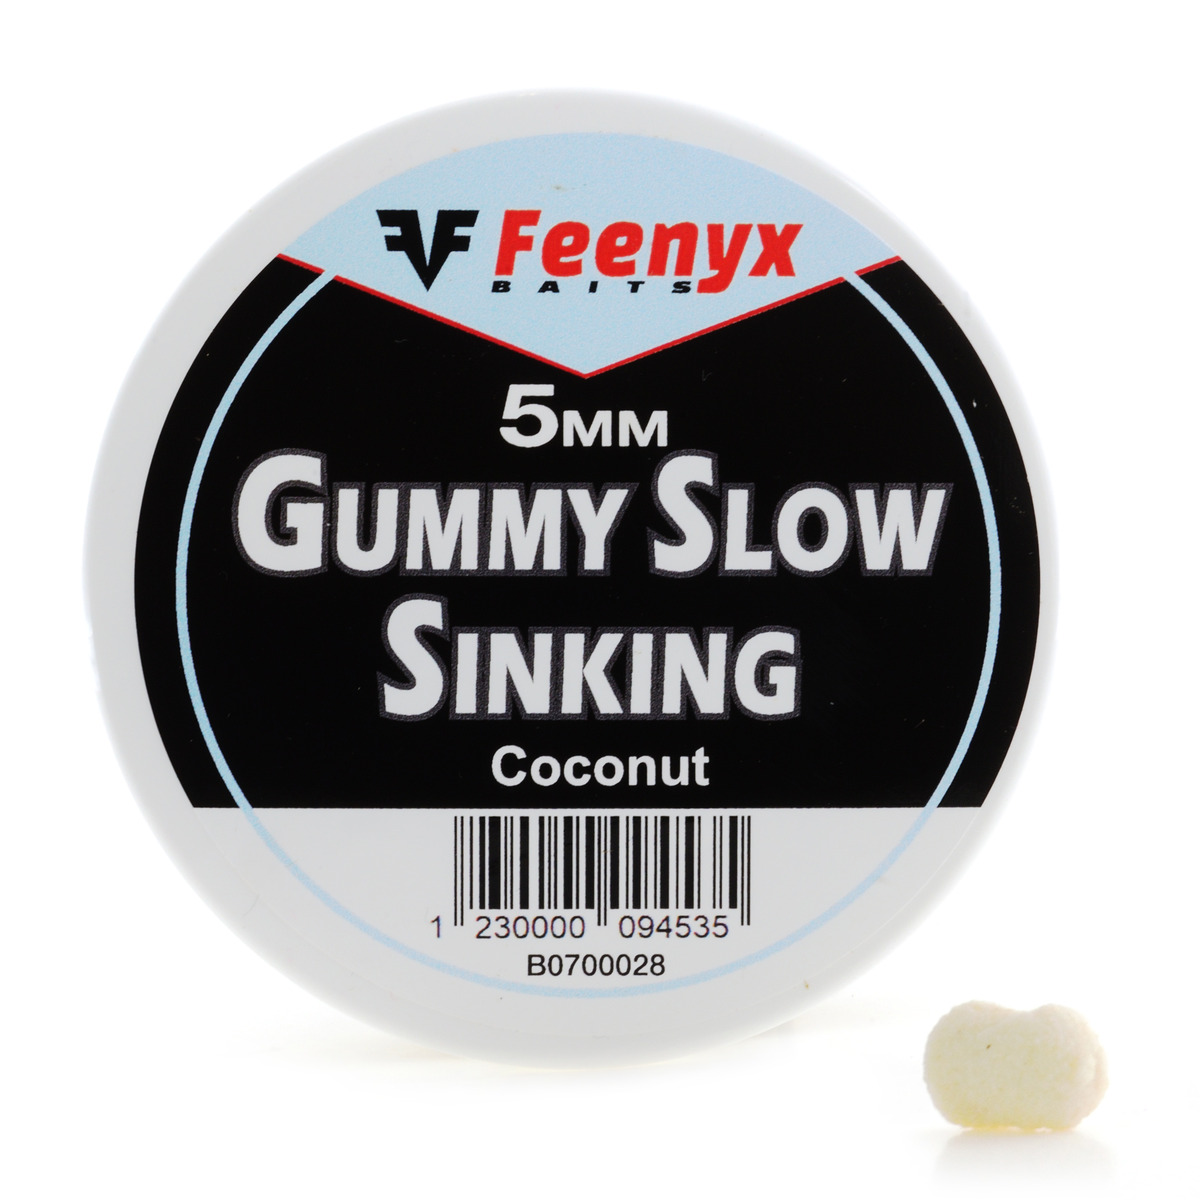 Feenyx Gummy Slow Sinking Coconut - 5 mm